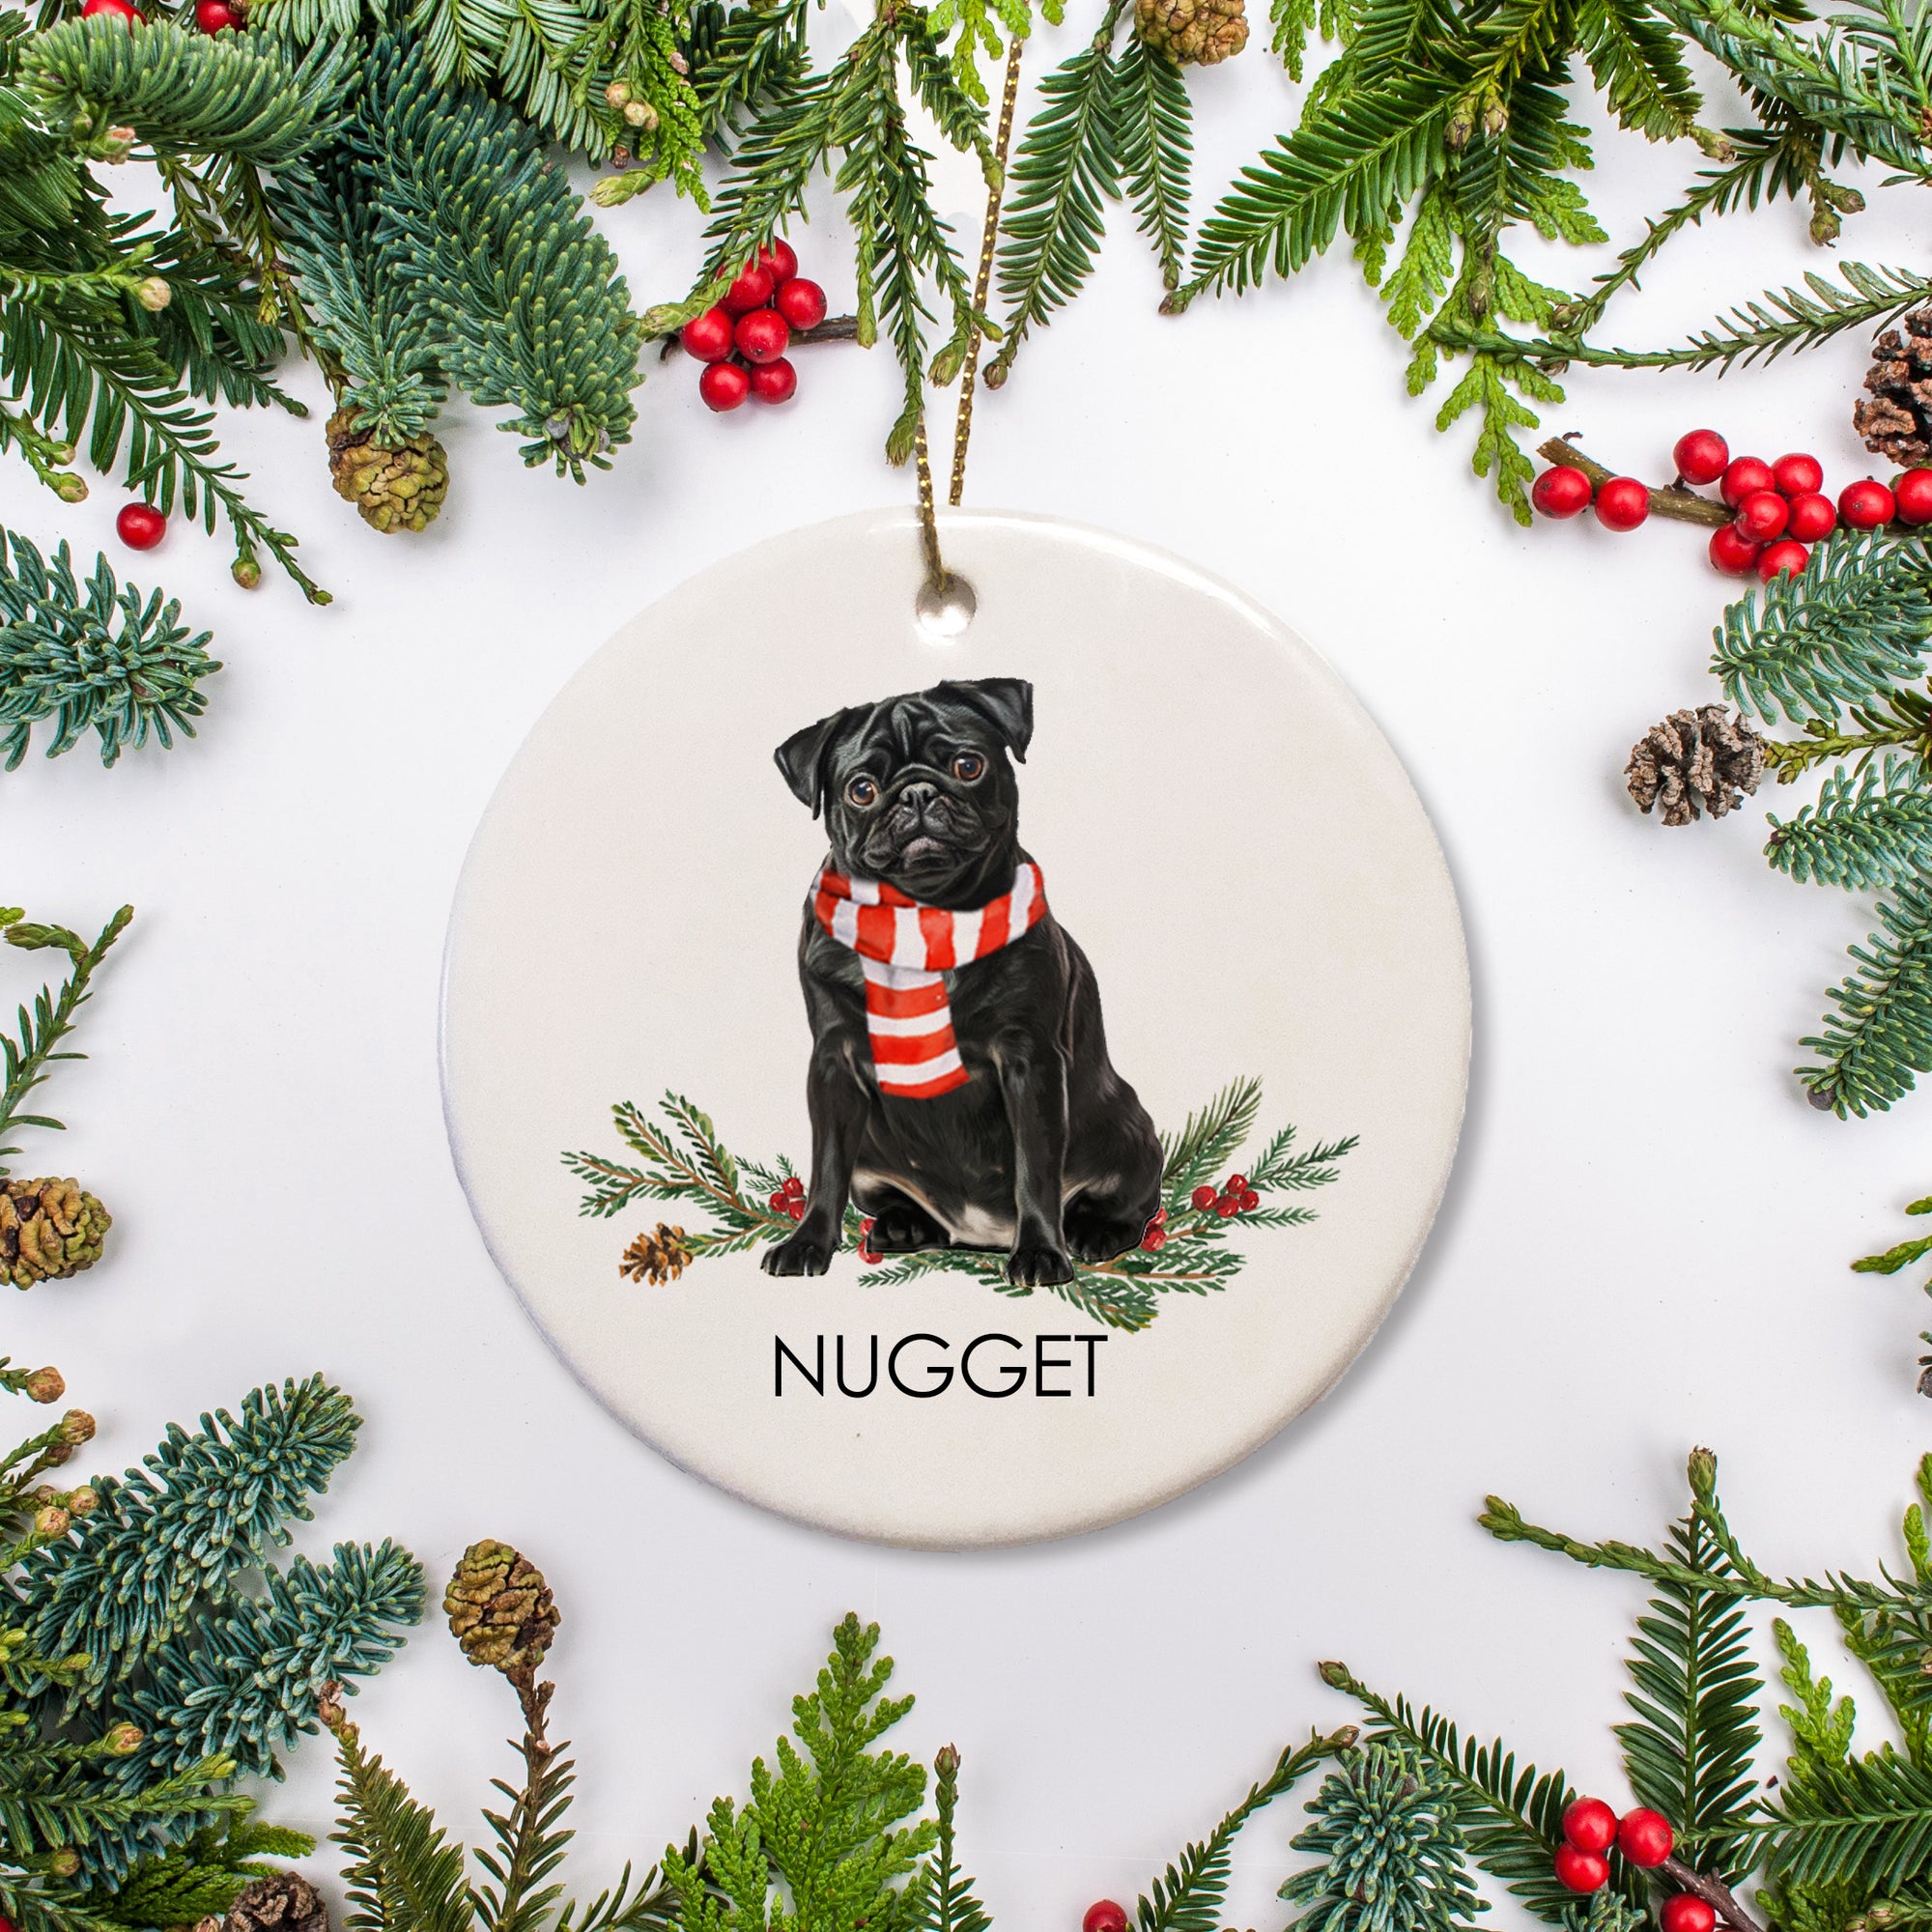 blakc pug dog personalized Christmas ornament